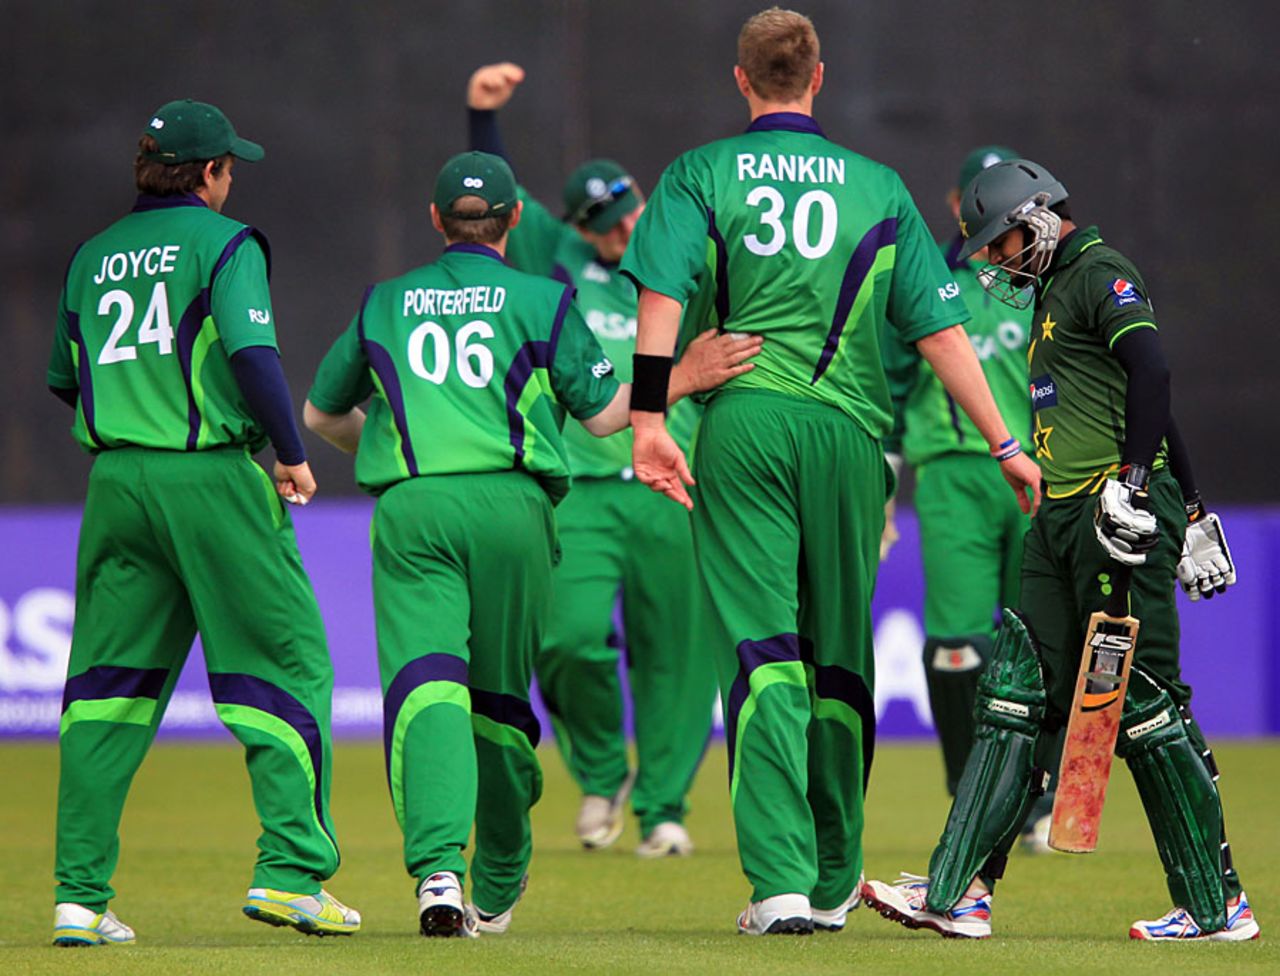 Azhar Ali was dismissed by Boyd Rankin for 39, Ireland v Pakistan, 2nd ODI, Belfast, May 30, 2011